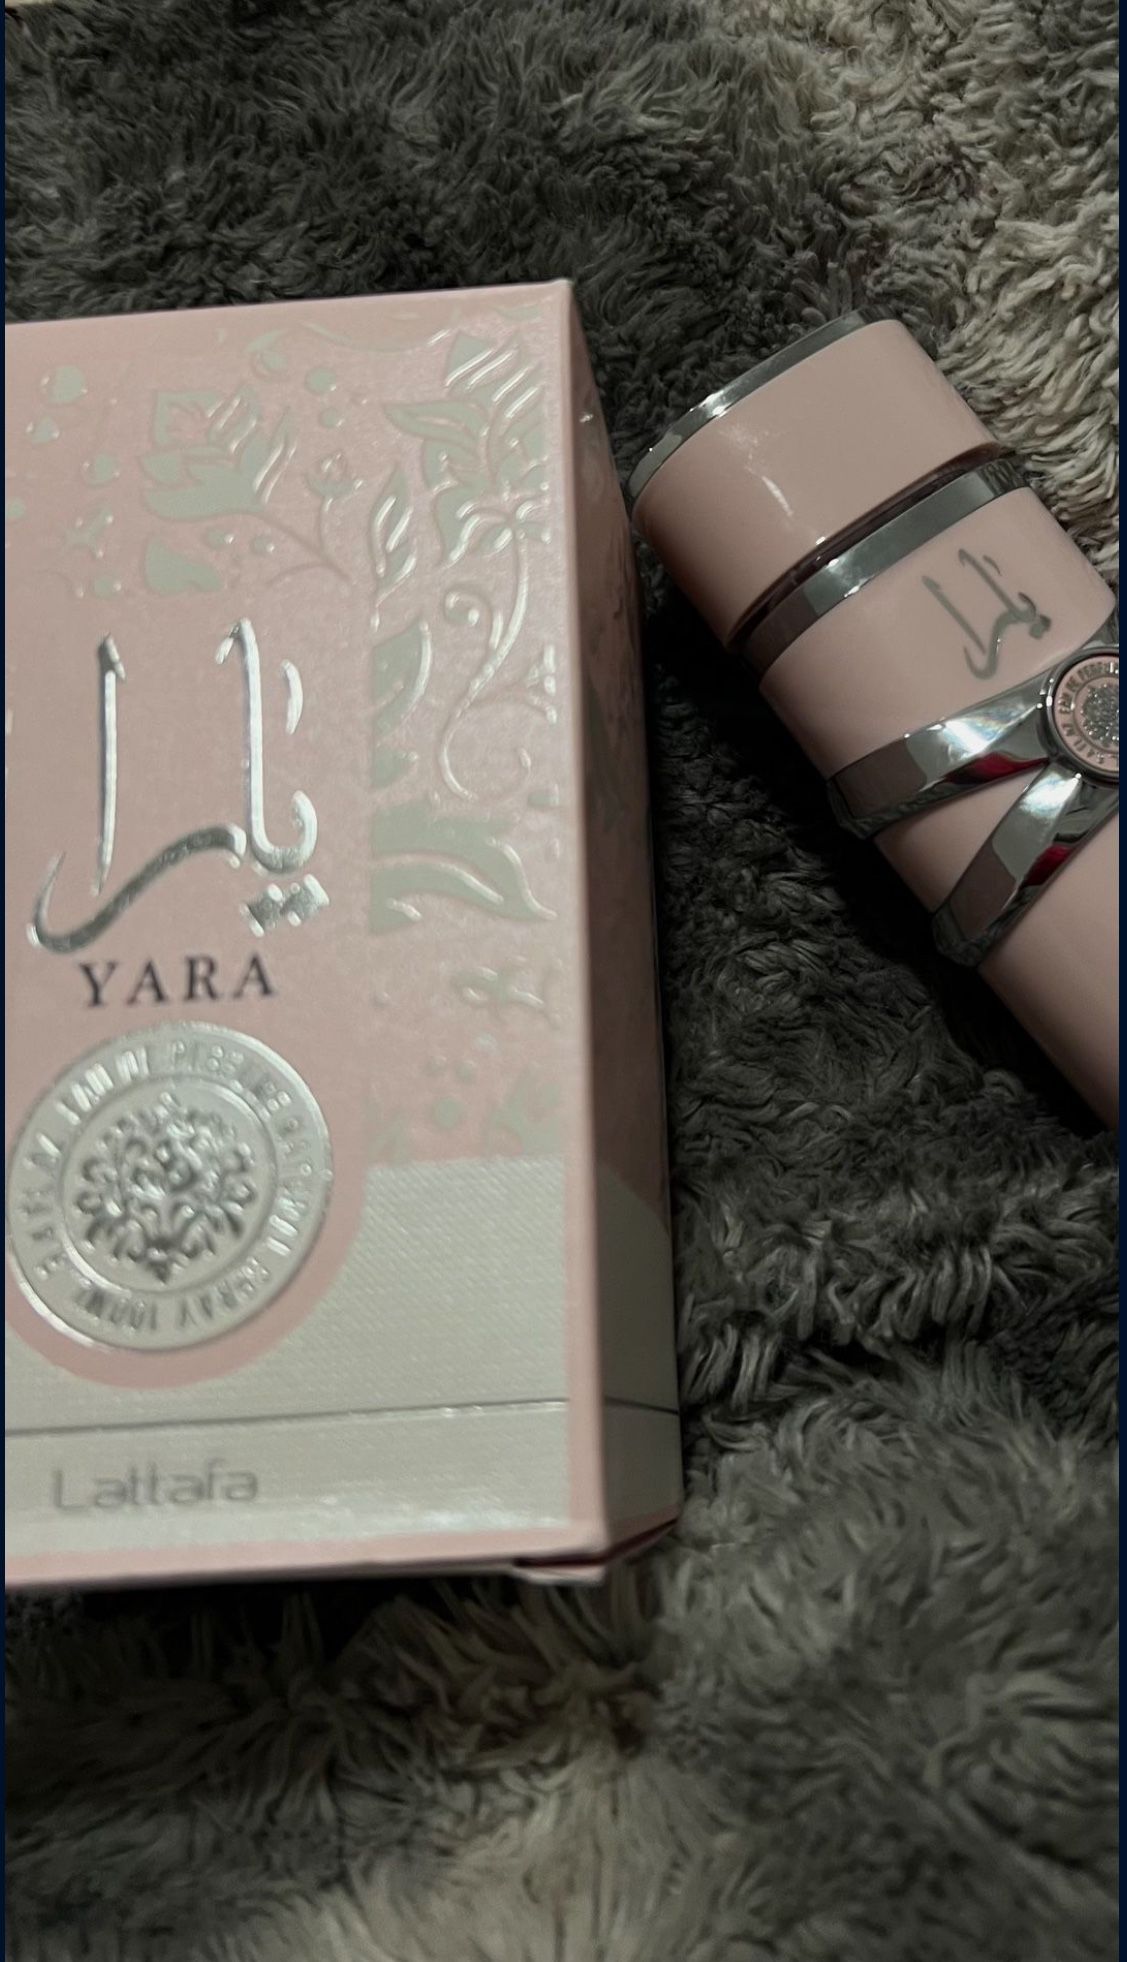 YARA Lattafa Perfume 